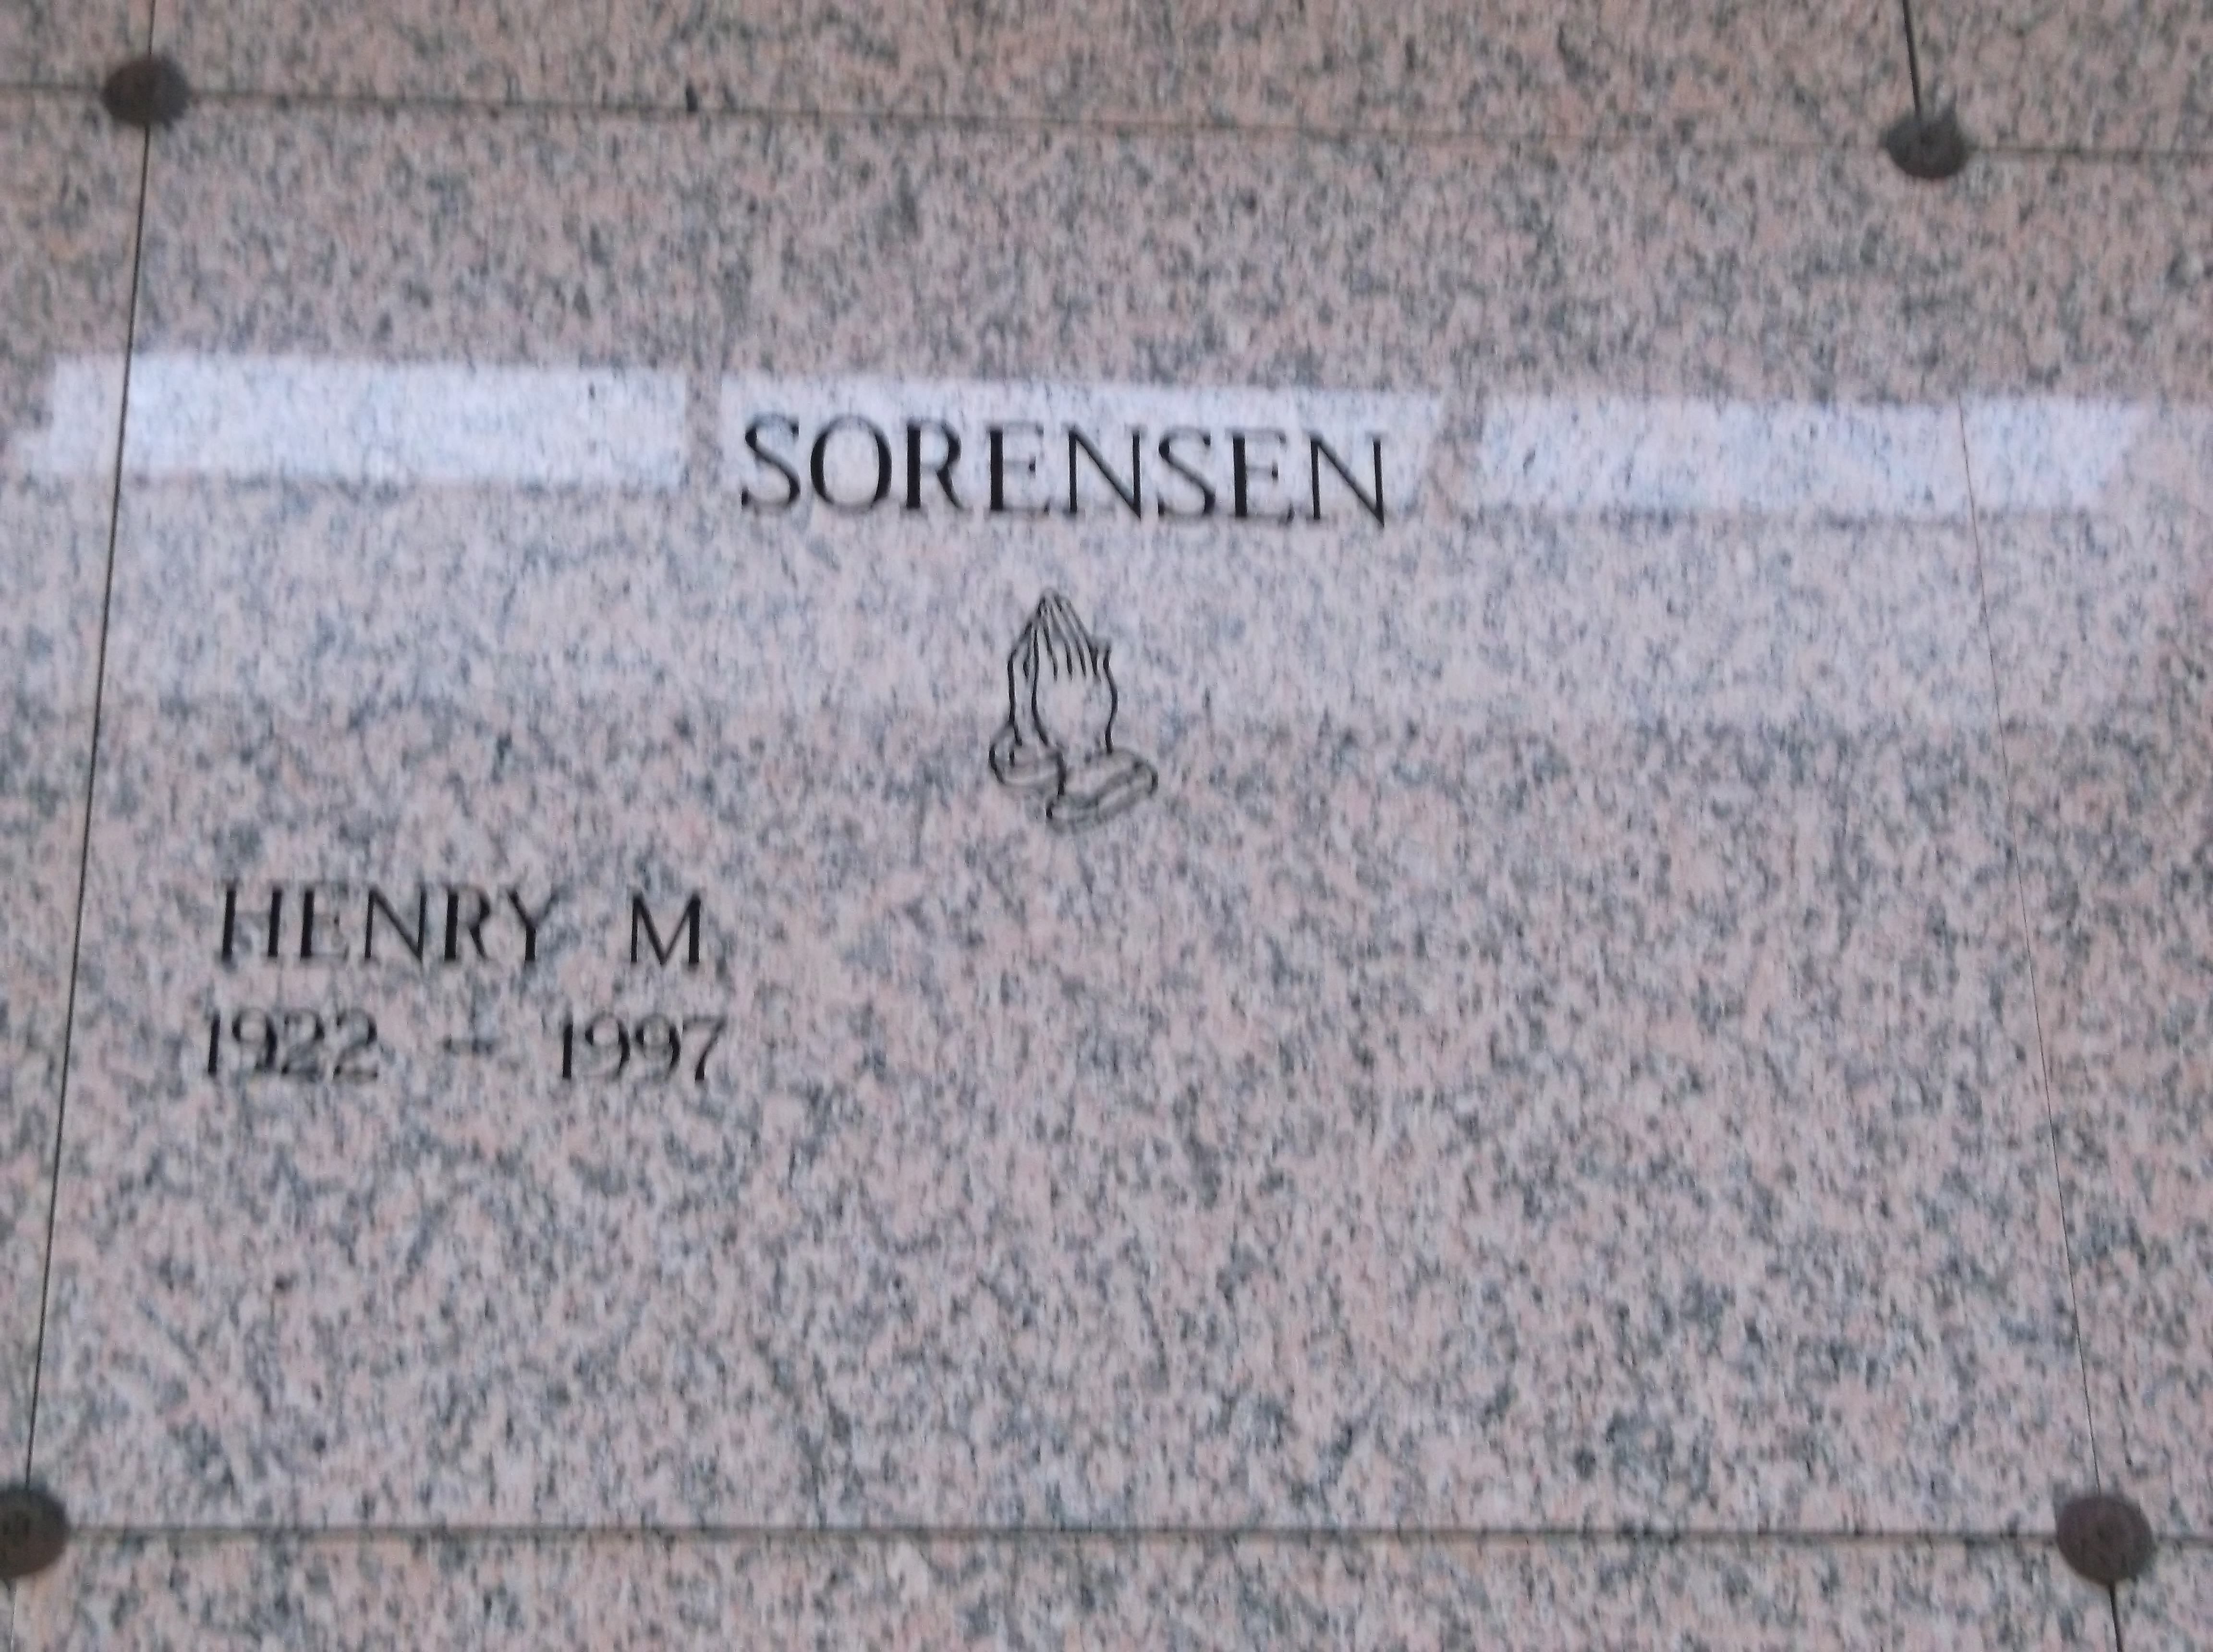 Henry M Sorensen